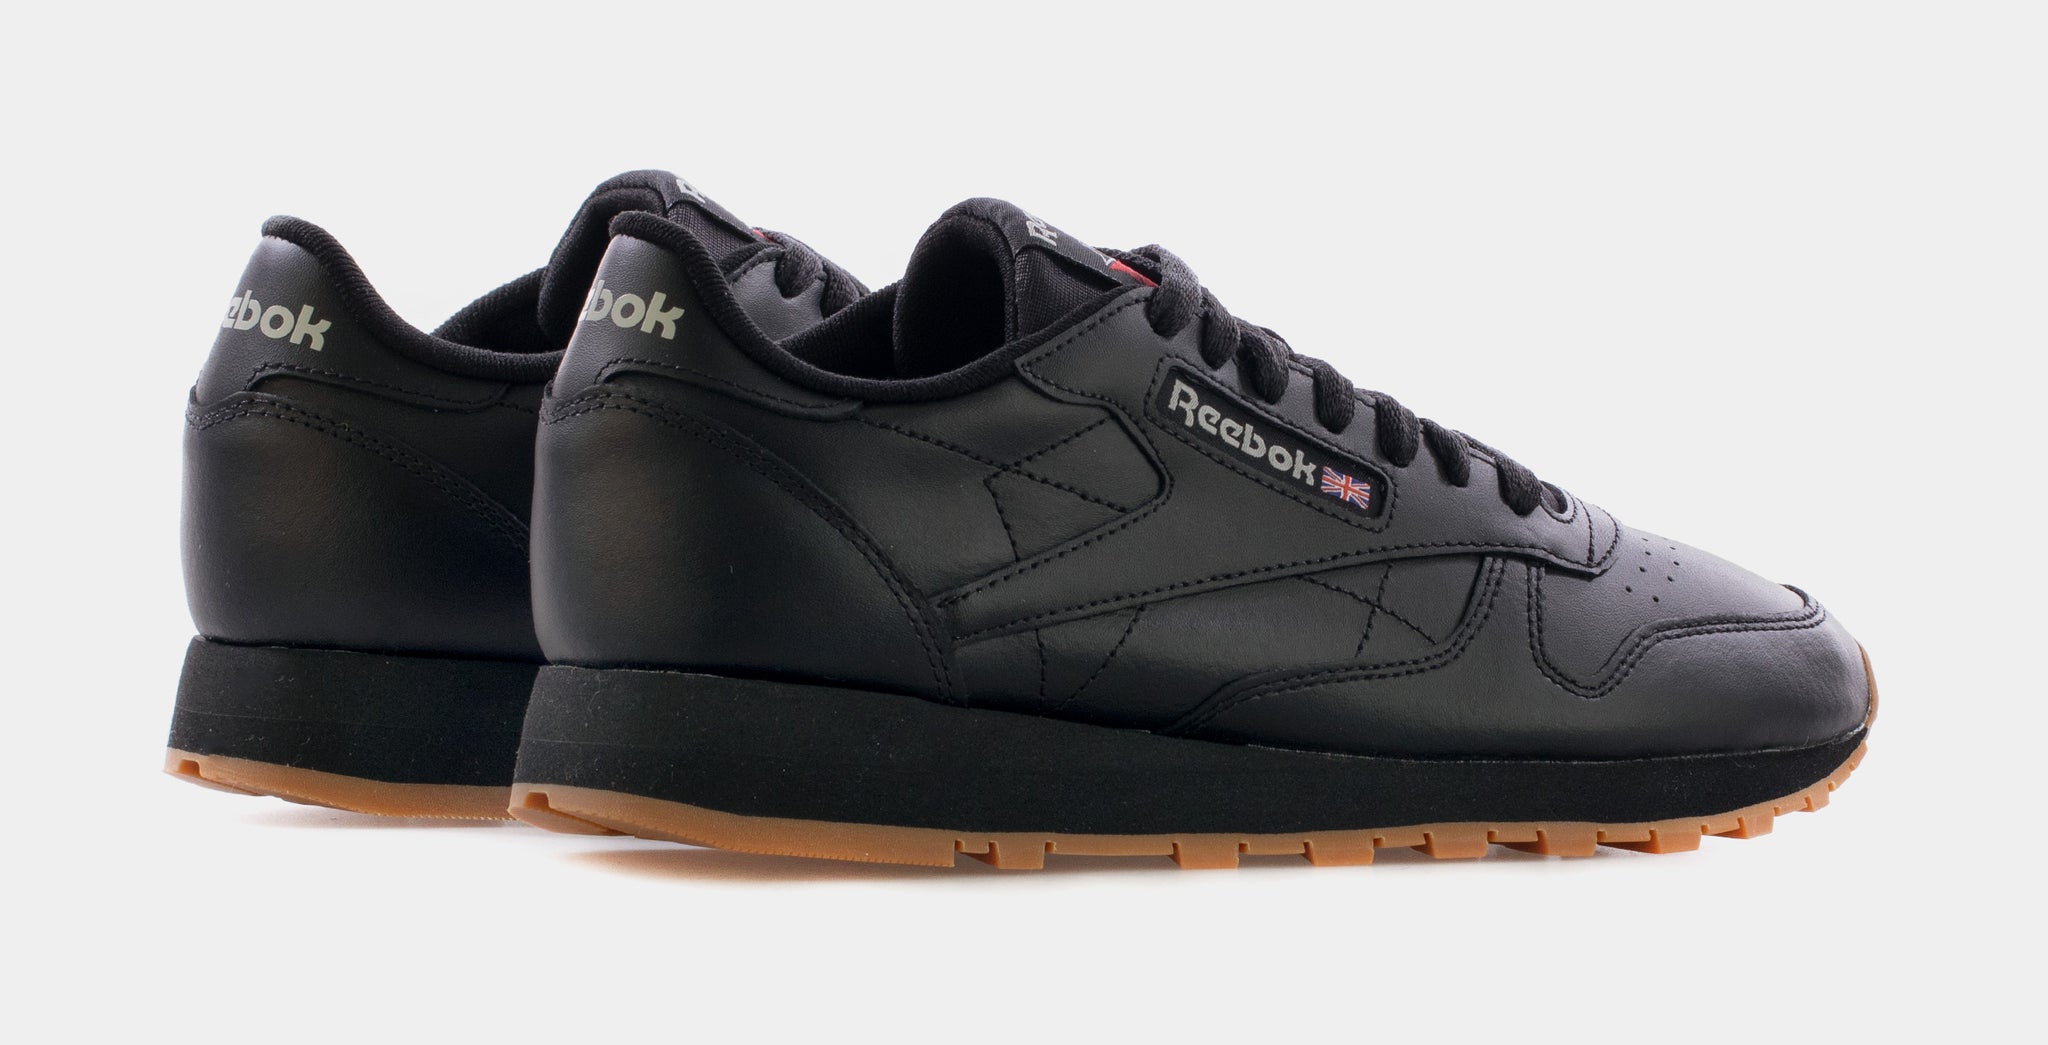 Reebok Classic Leather Mens Lifestyle Shoes Black GY0954 – Shoe Palace